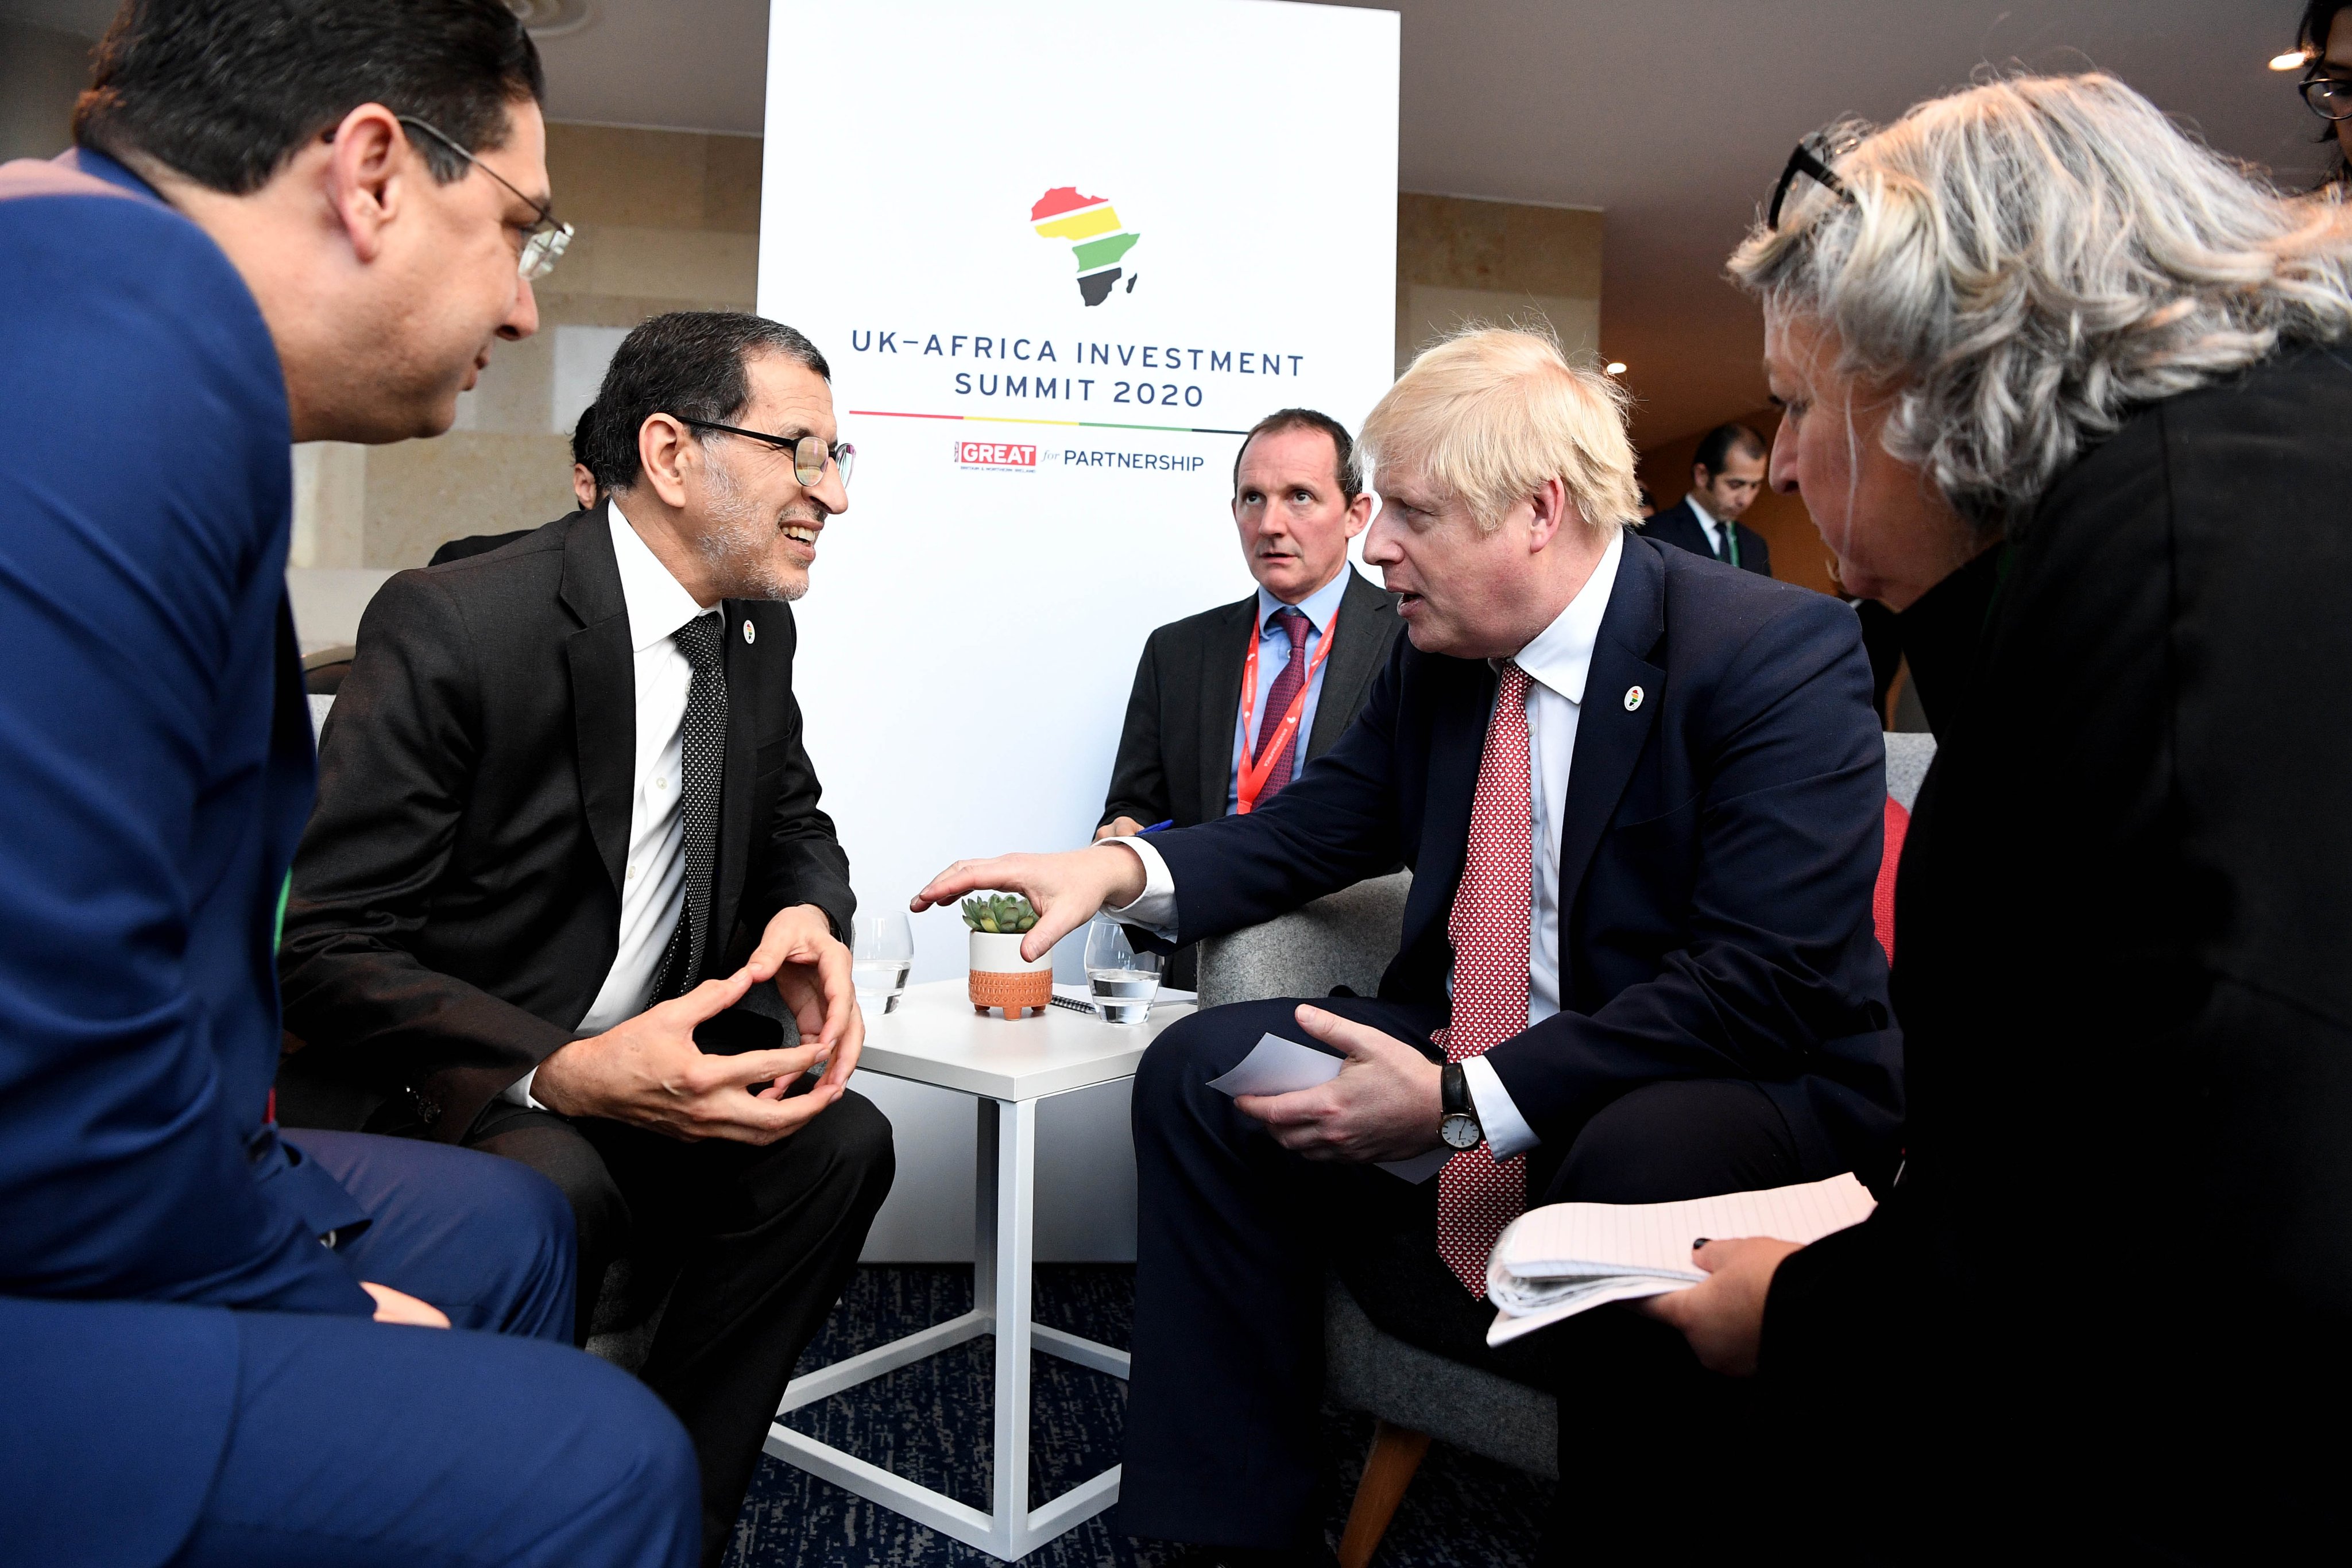 UK-Africa Investment Summit signed deals over £6.5 billion, More urge on investors to boost biz